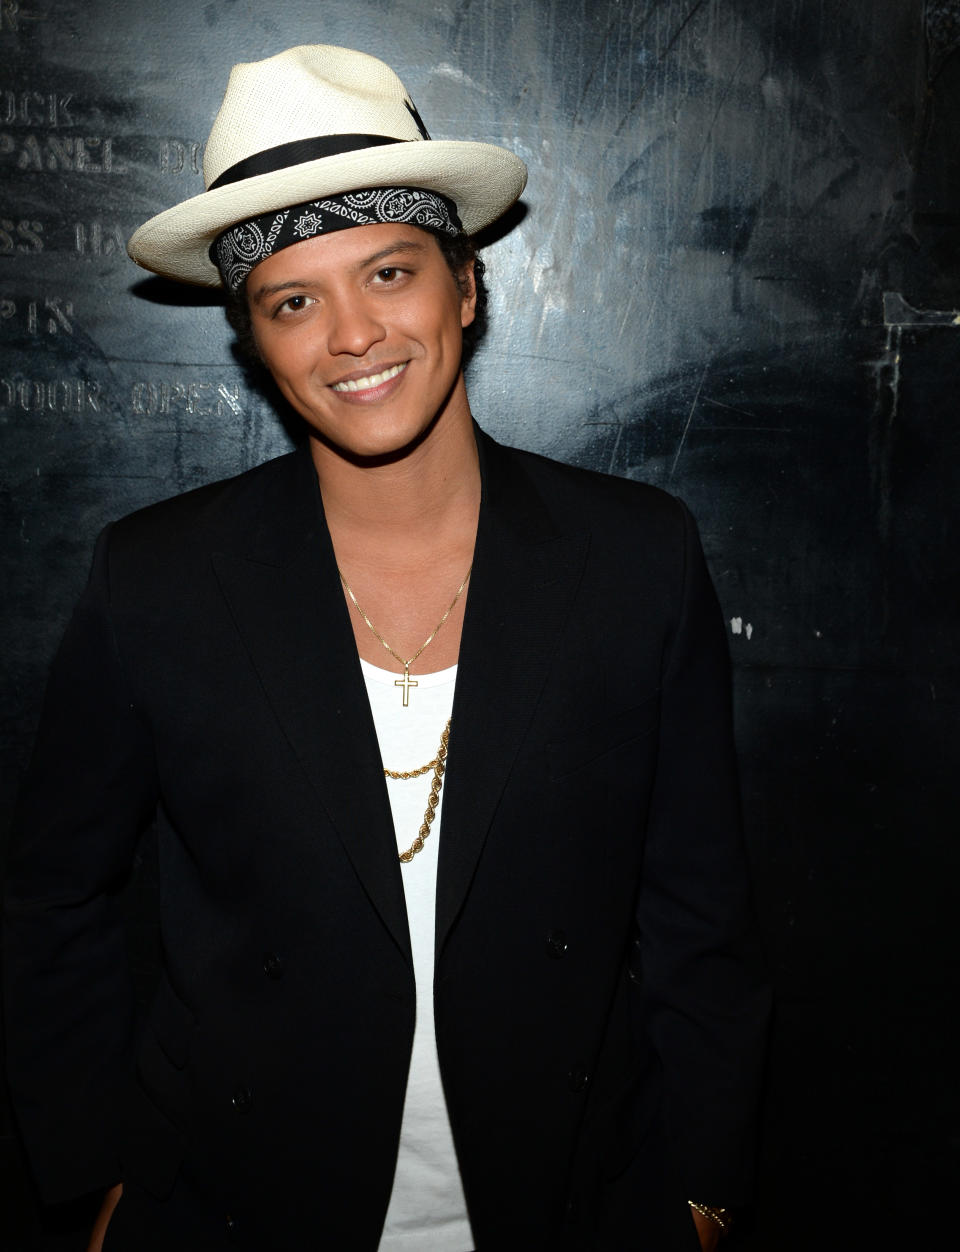 Bruno Mars (born Peter Gene Hernandez)